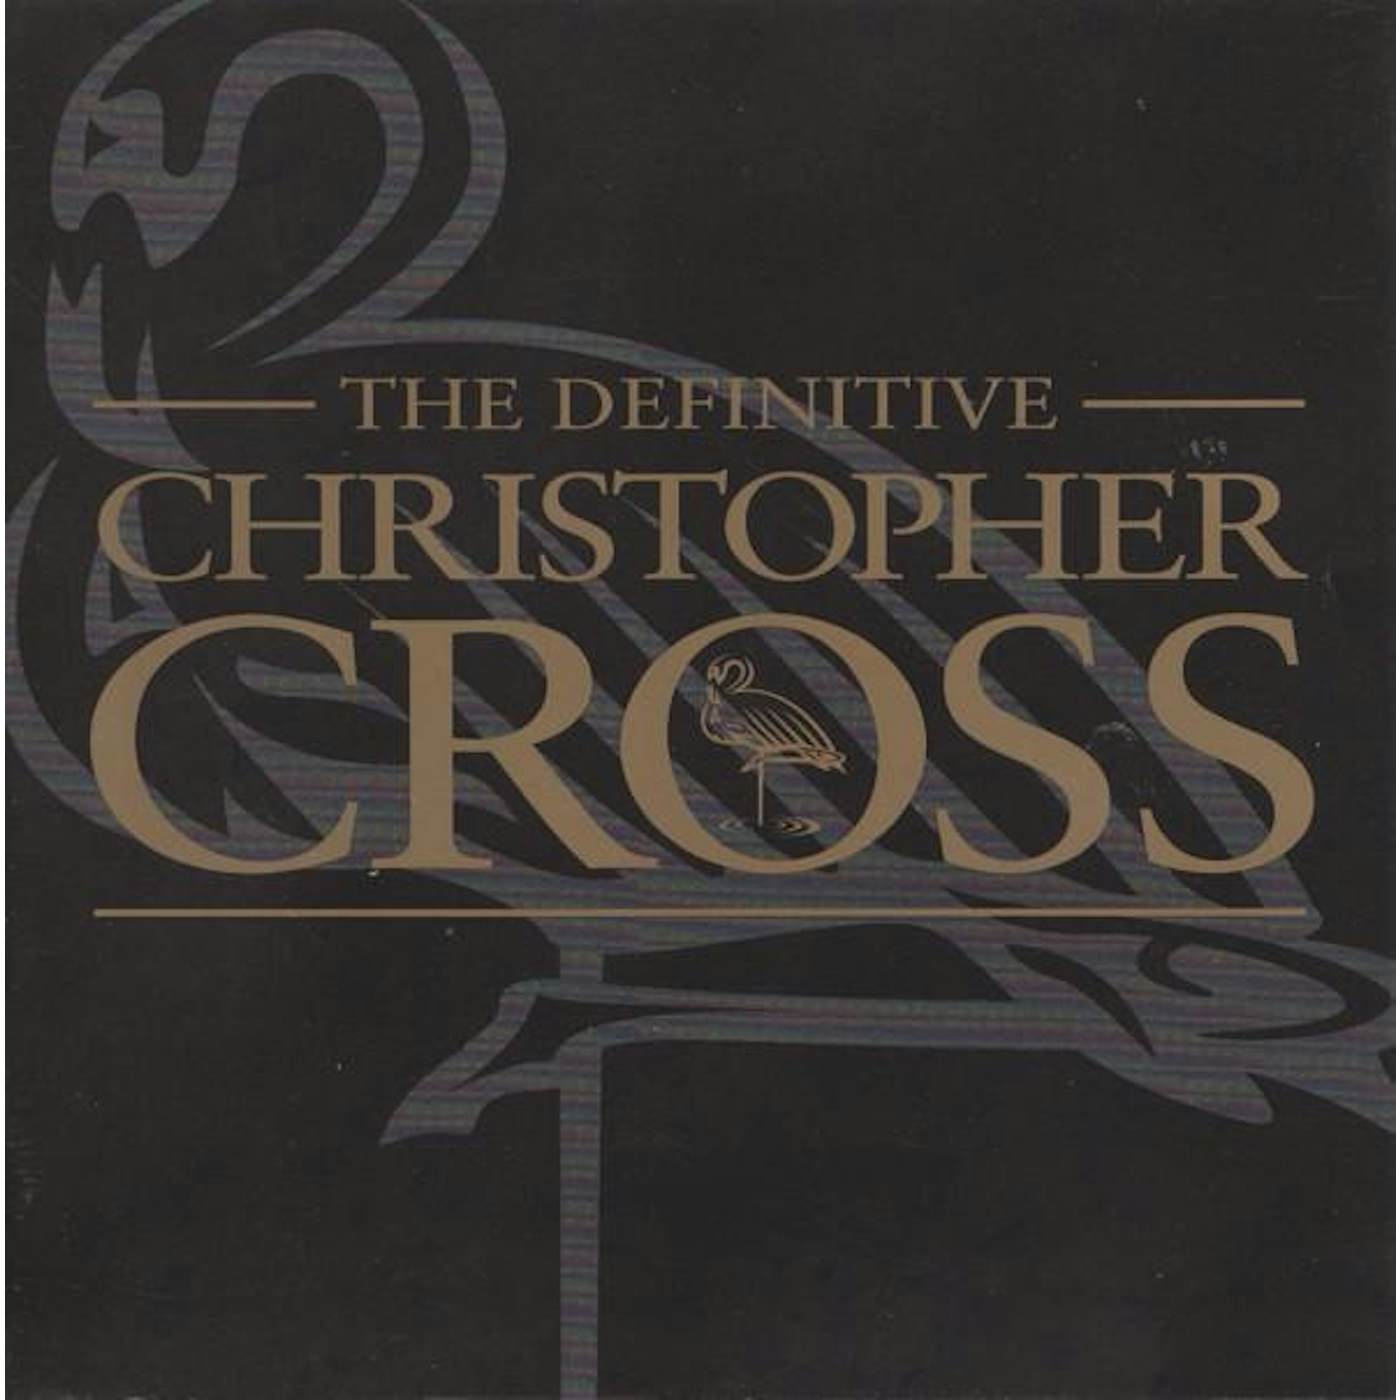 DEFINITIVE CHRISTOPHER CROSS CD